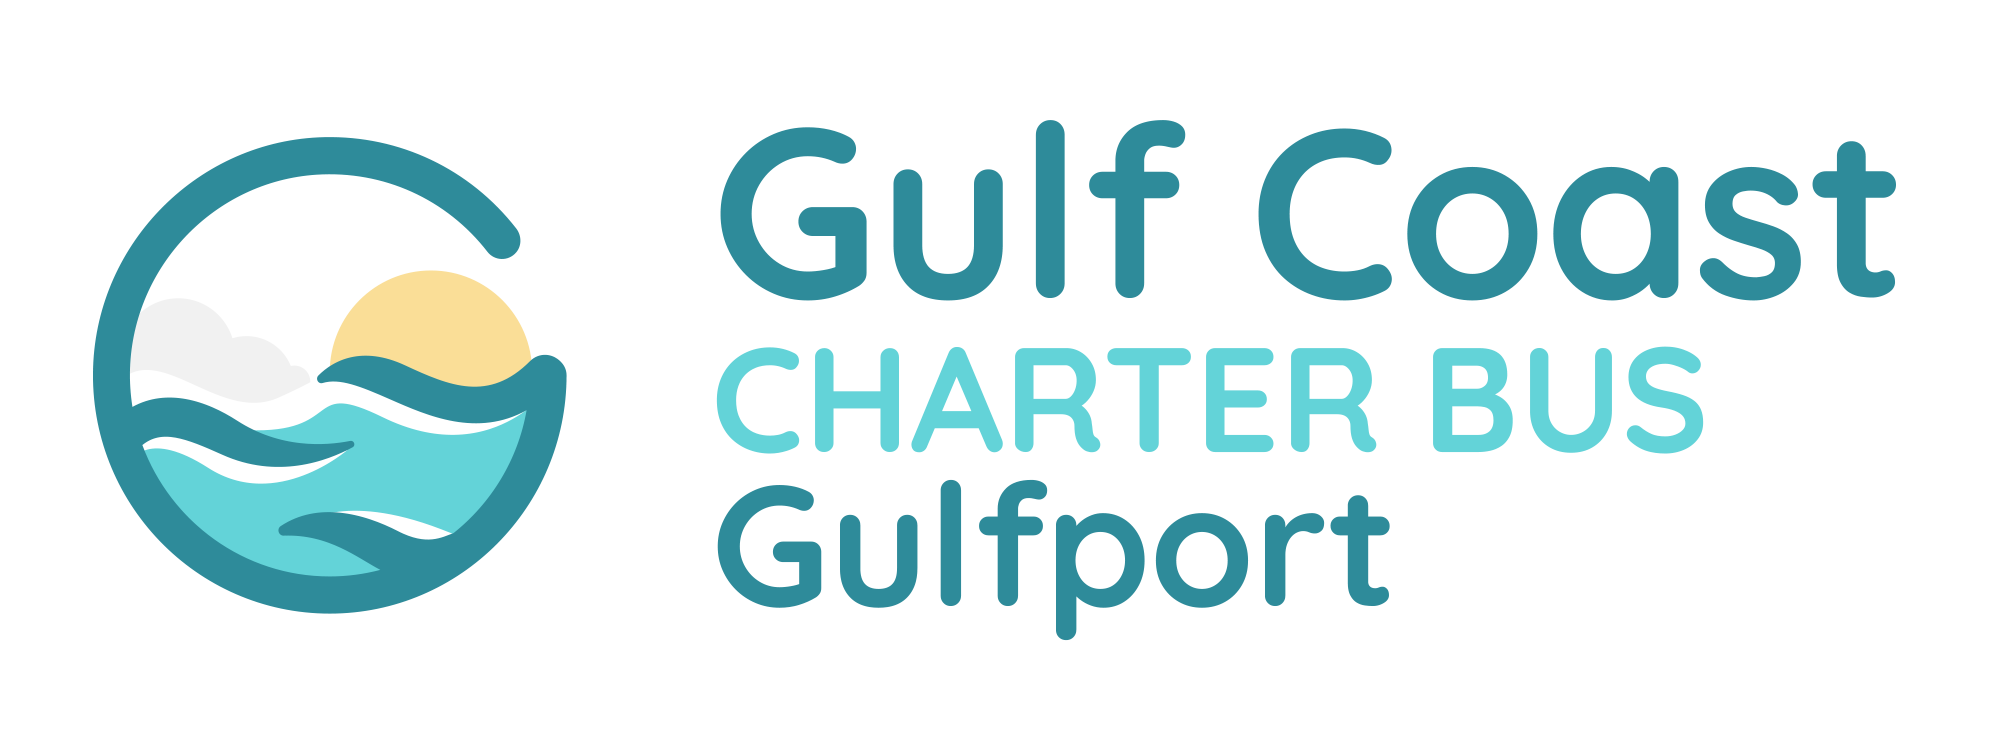 Gulfport charter bus